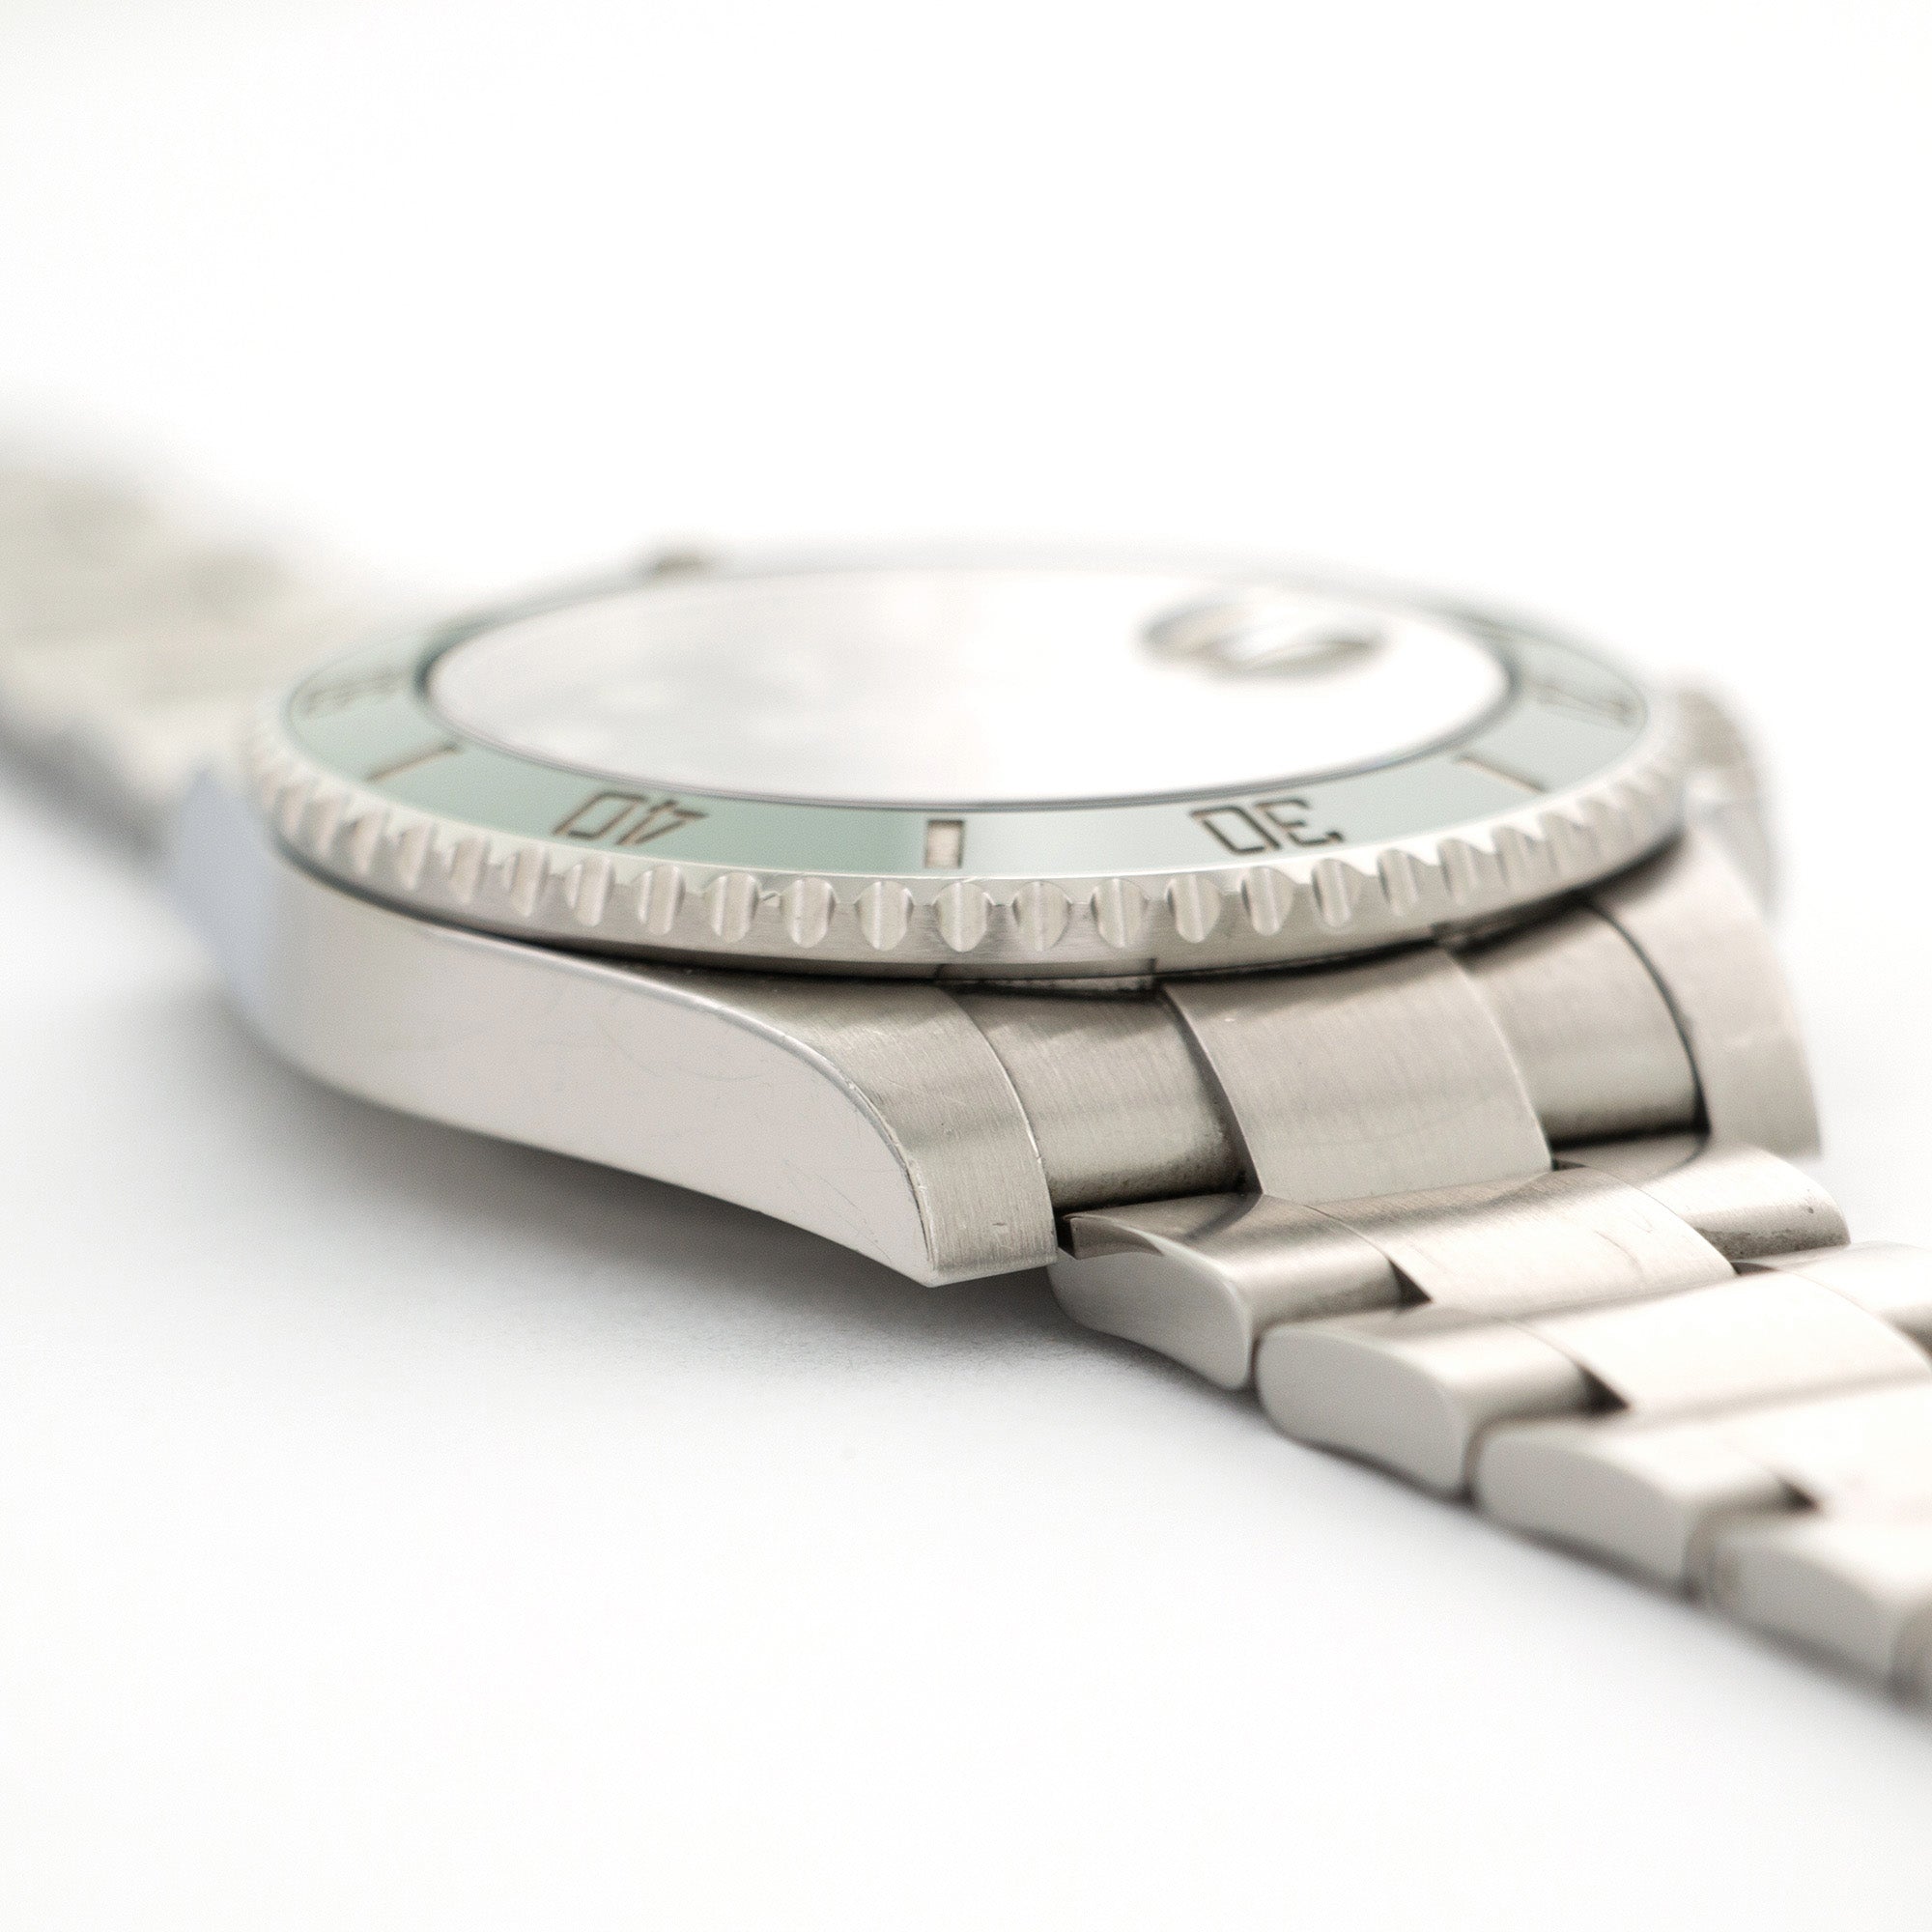 Rolex - Rolex Submariner Green Ceramic Watch Ref. 116610LV with Original Box and Warranty Card - The Keystone Watches